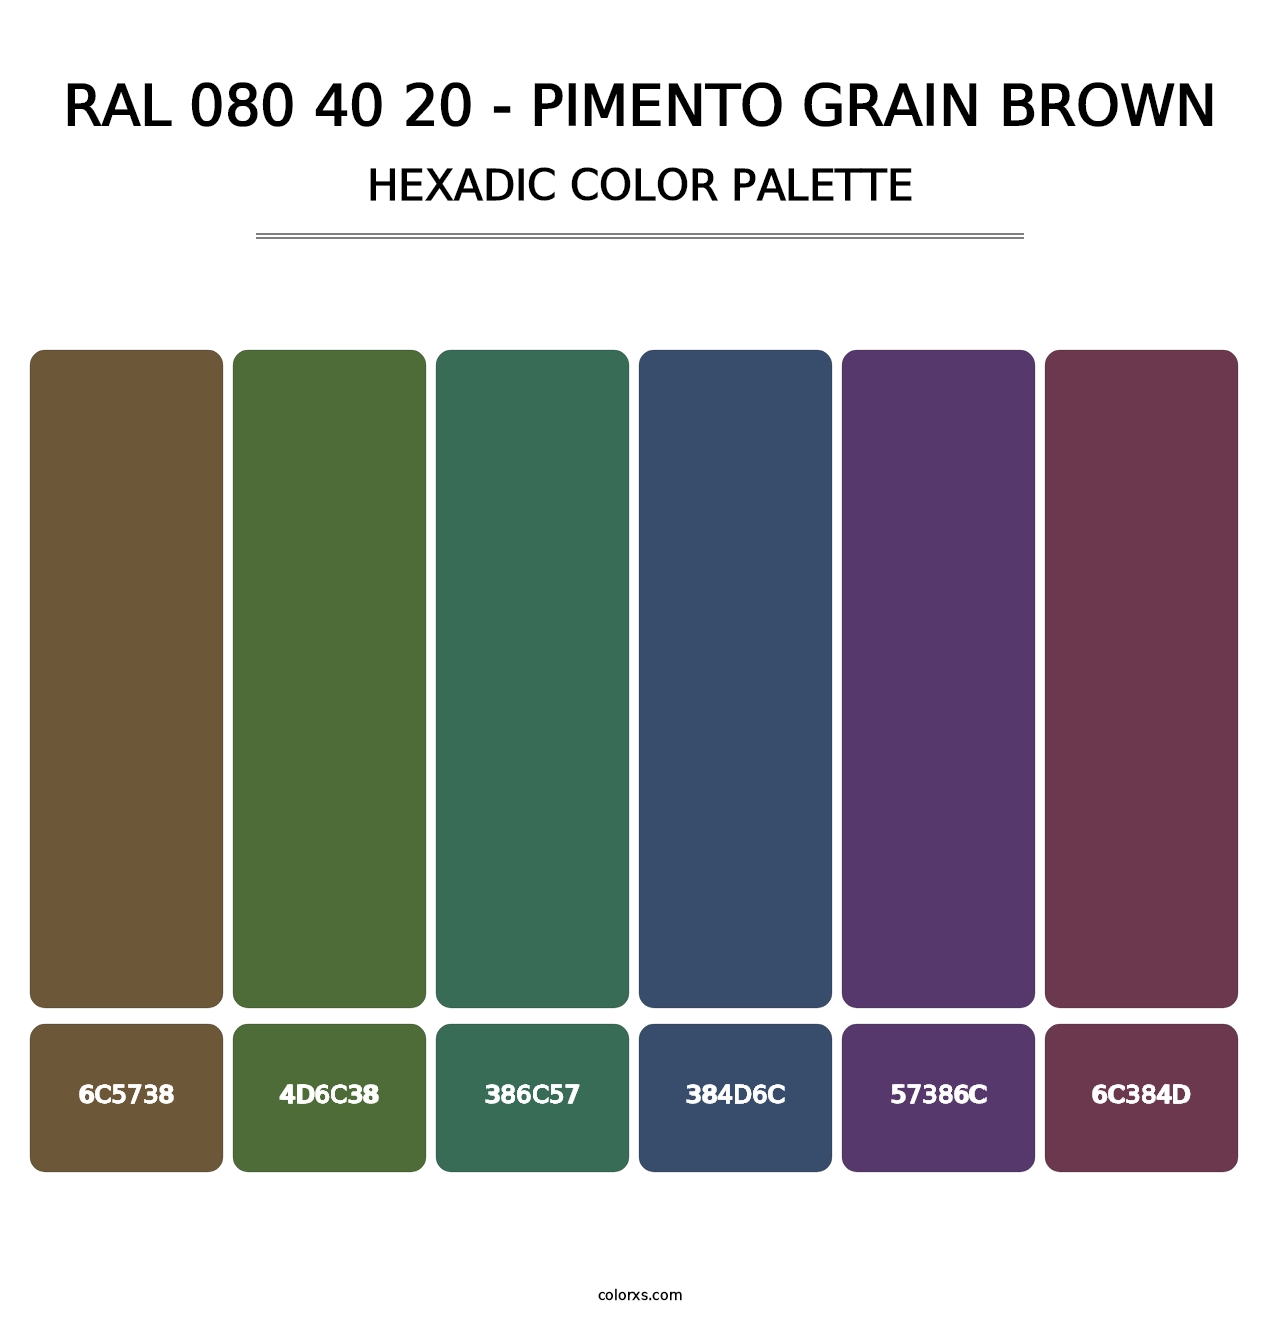 RAL 080 40 20 - Pimento Grain Brown - Hexadic Color Palette